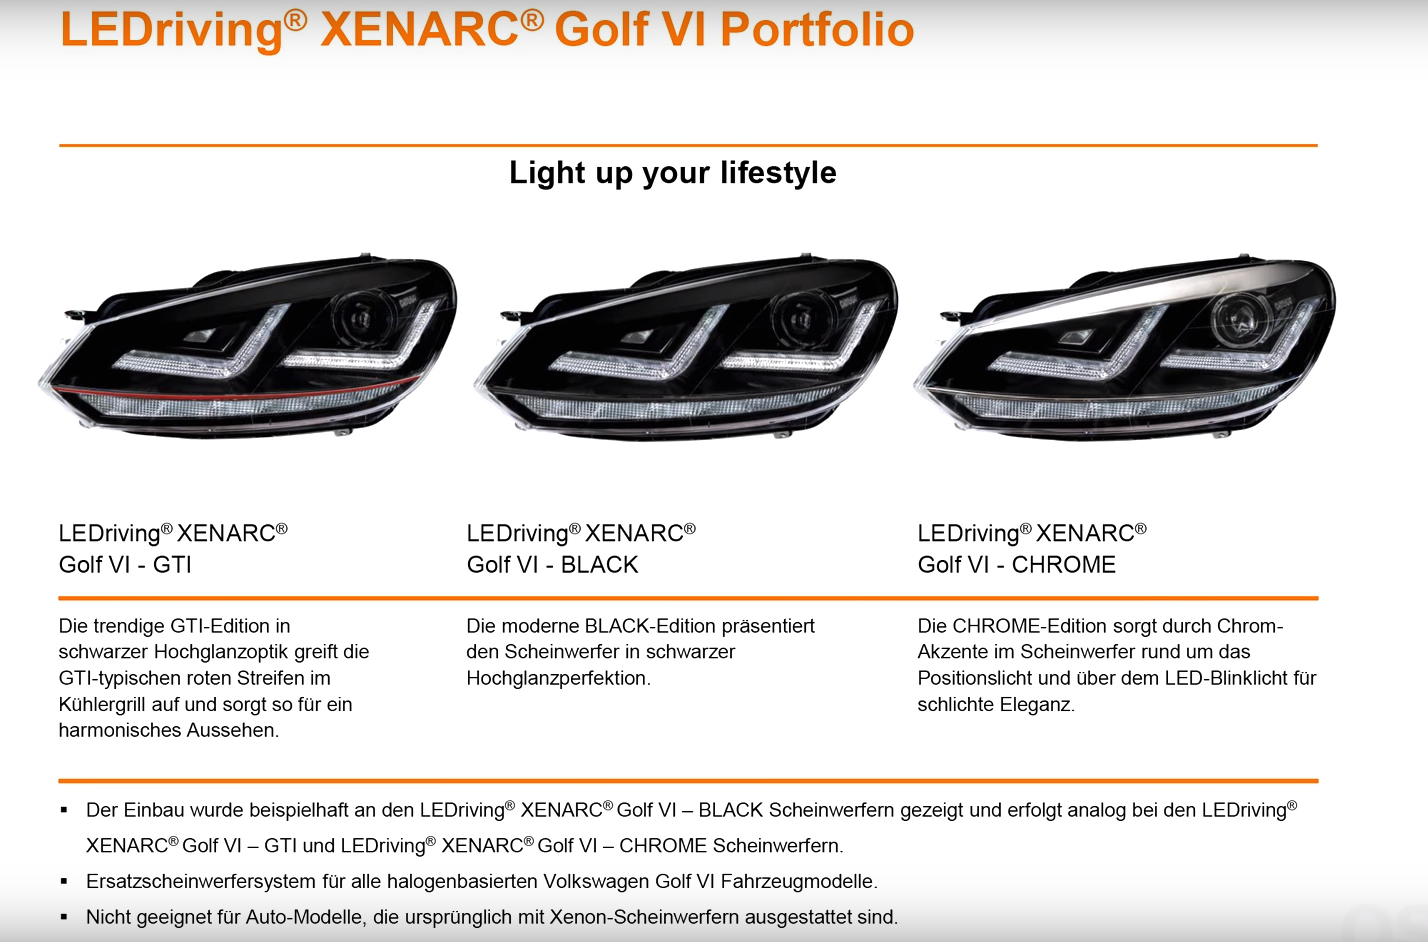 LEDriving XENARC: Golf VI Editions